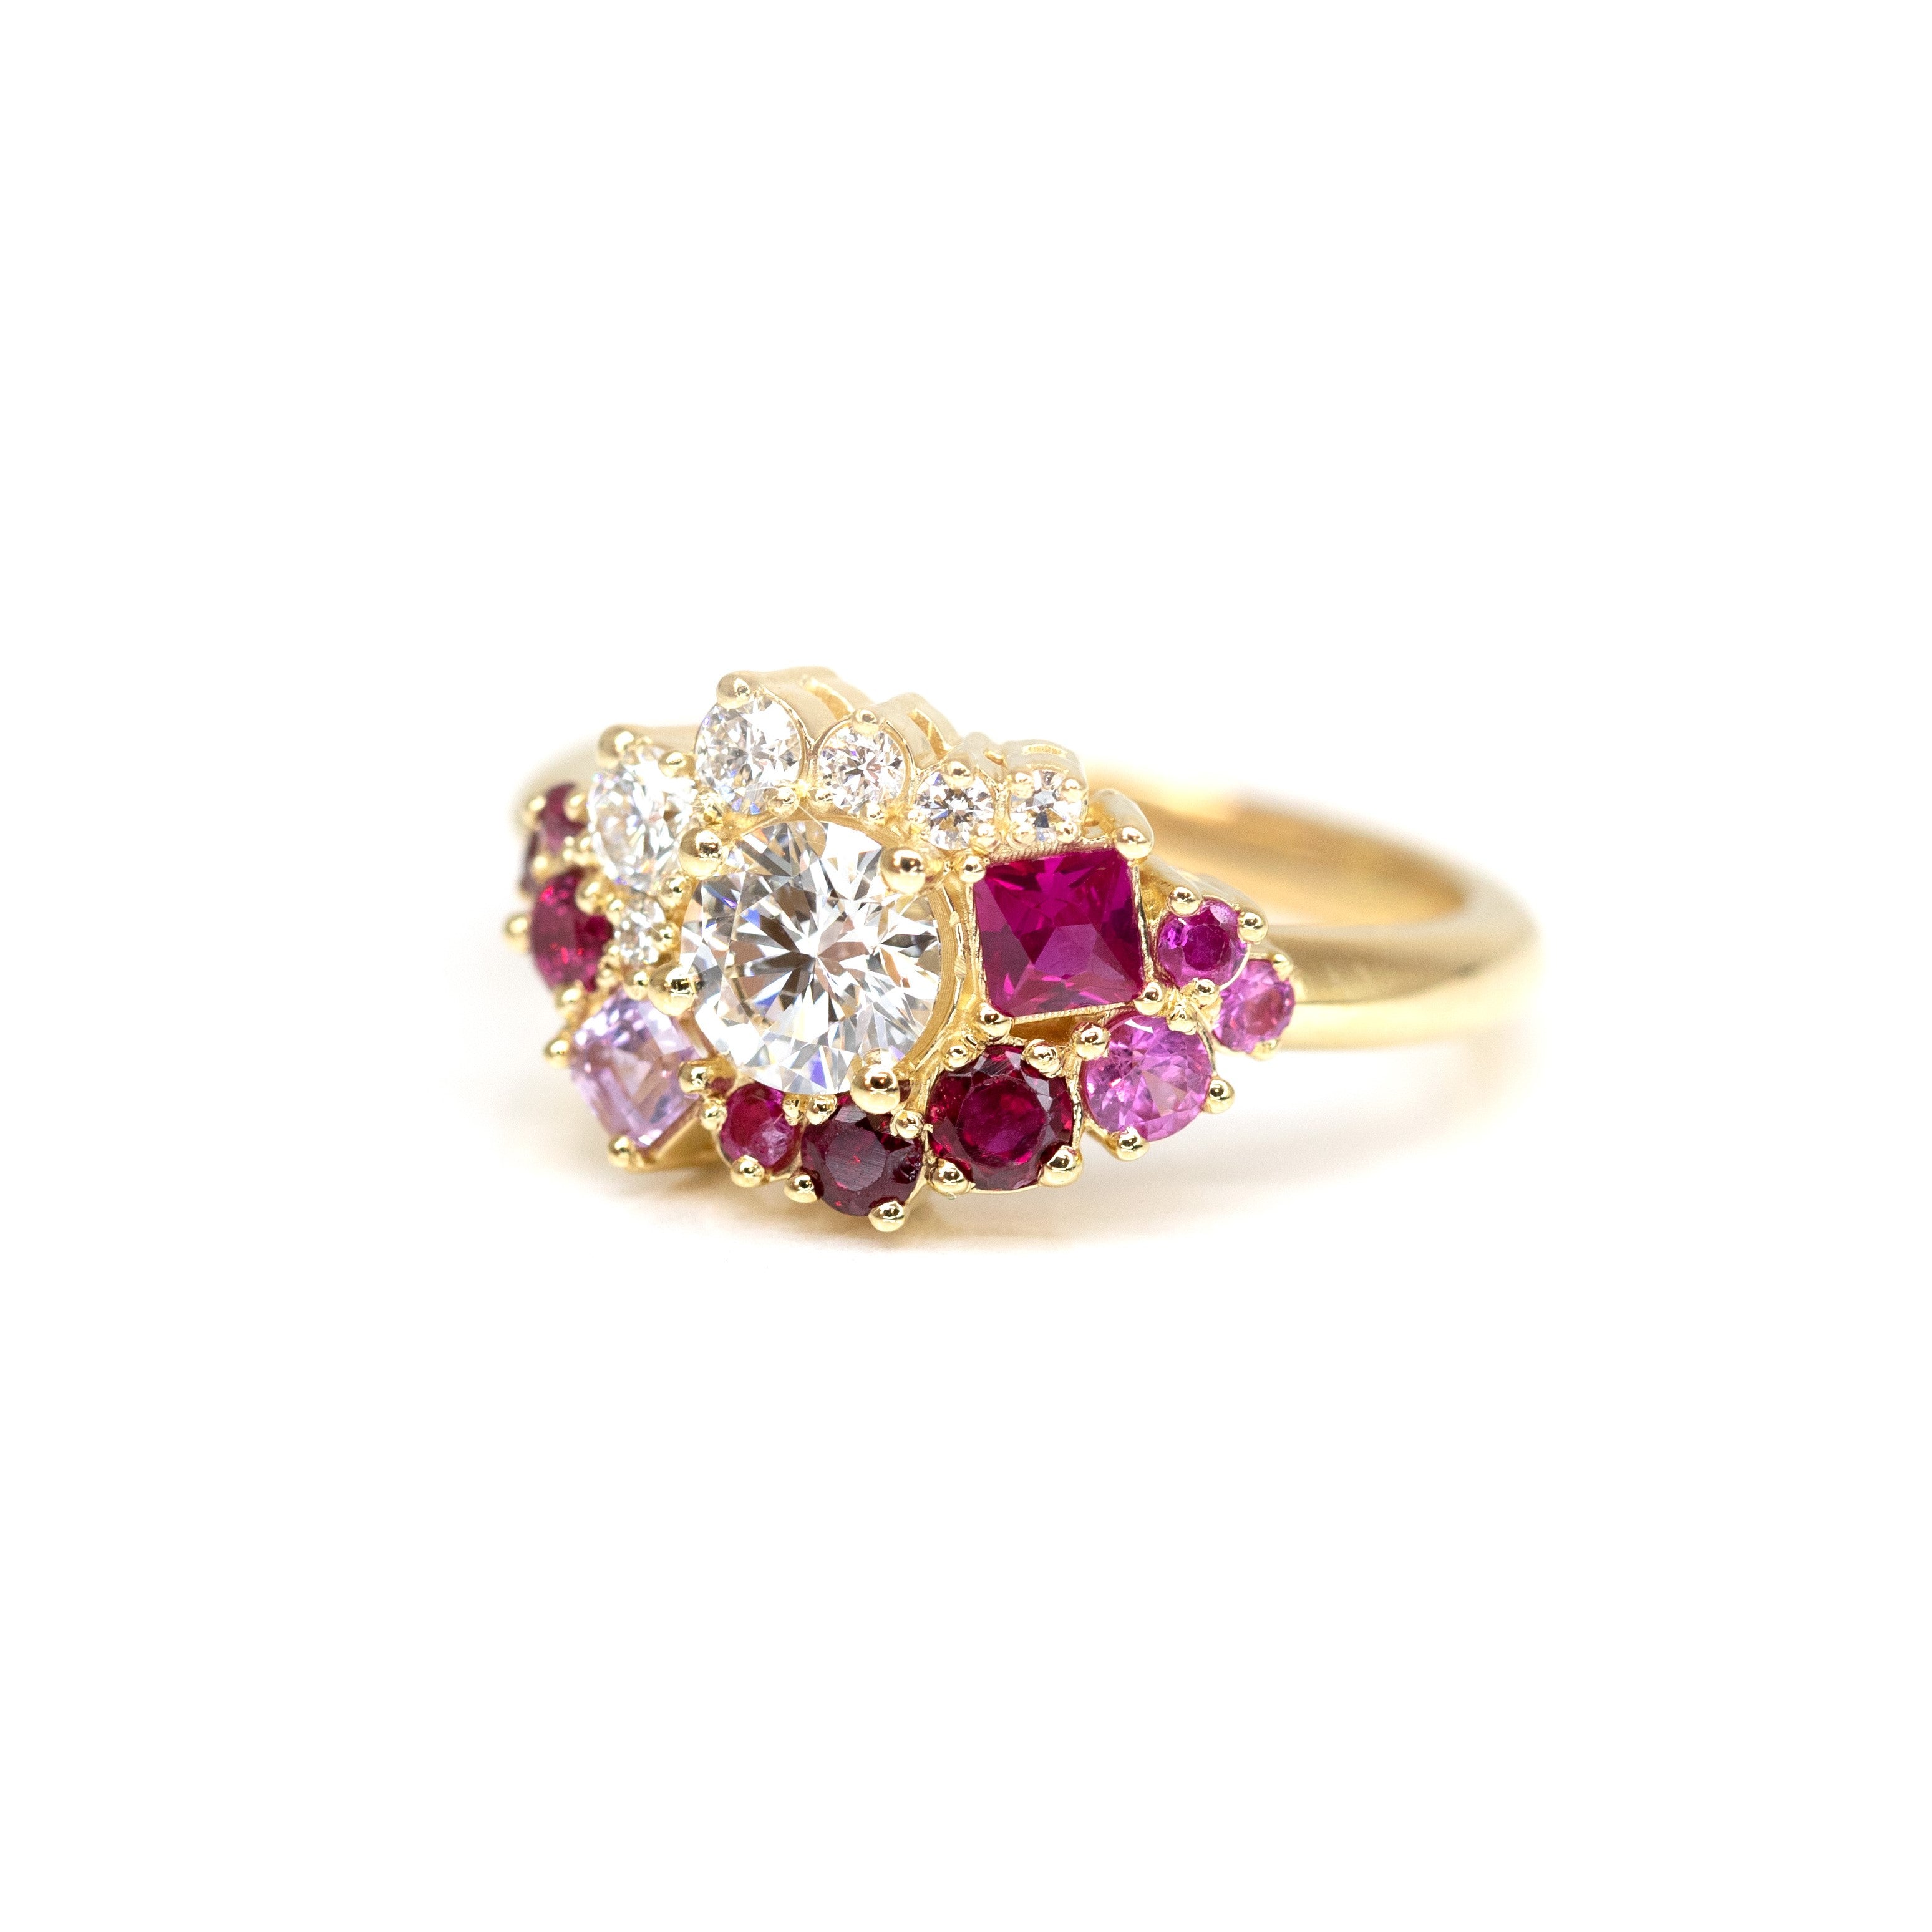 Avalanche Red Orange Diamond Statement Ring By Bena Jewelry Designer